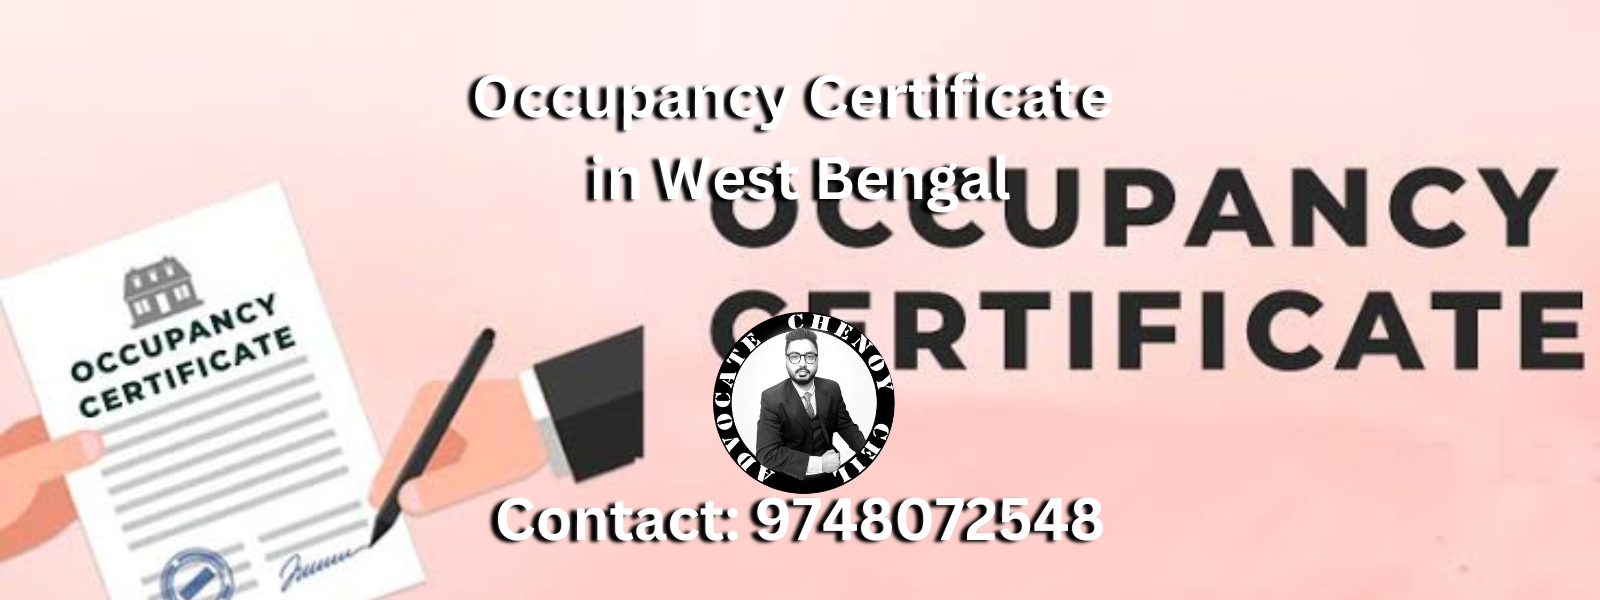 Occupancy Certificate in West Bengal